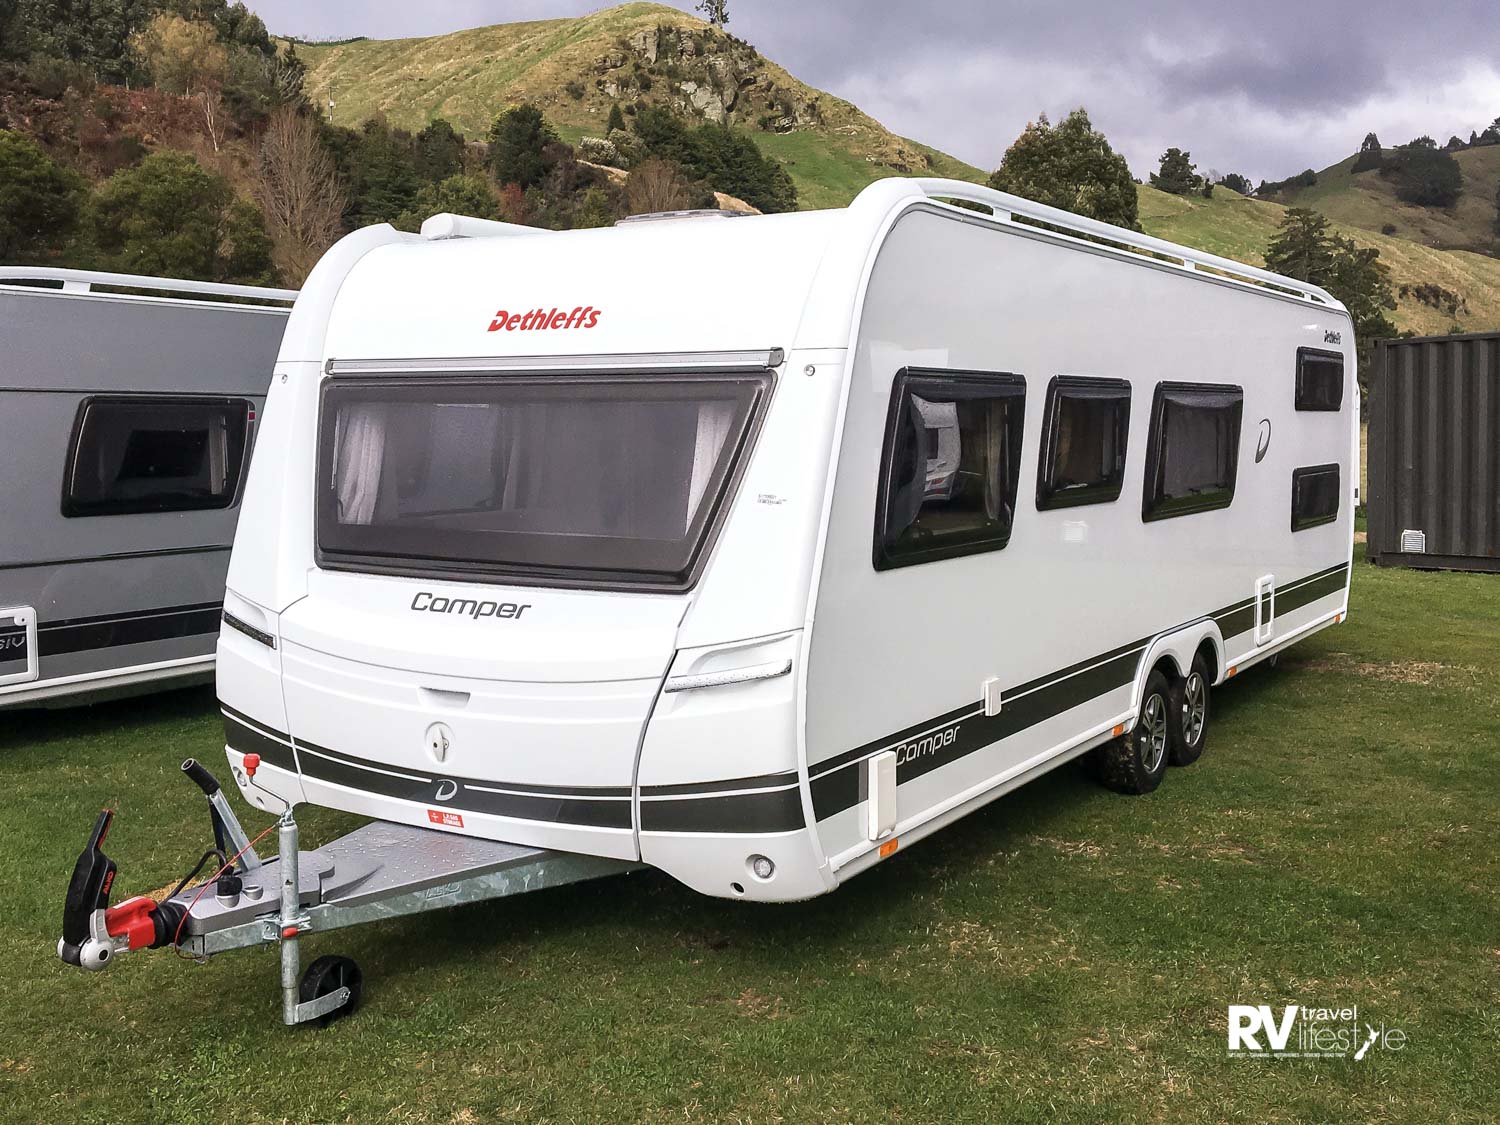 Capacious Camper Caravan – RV Travel Lifestyle Magazine